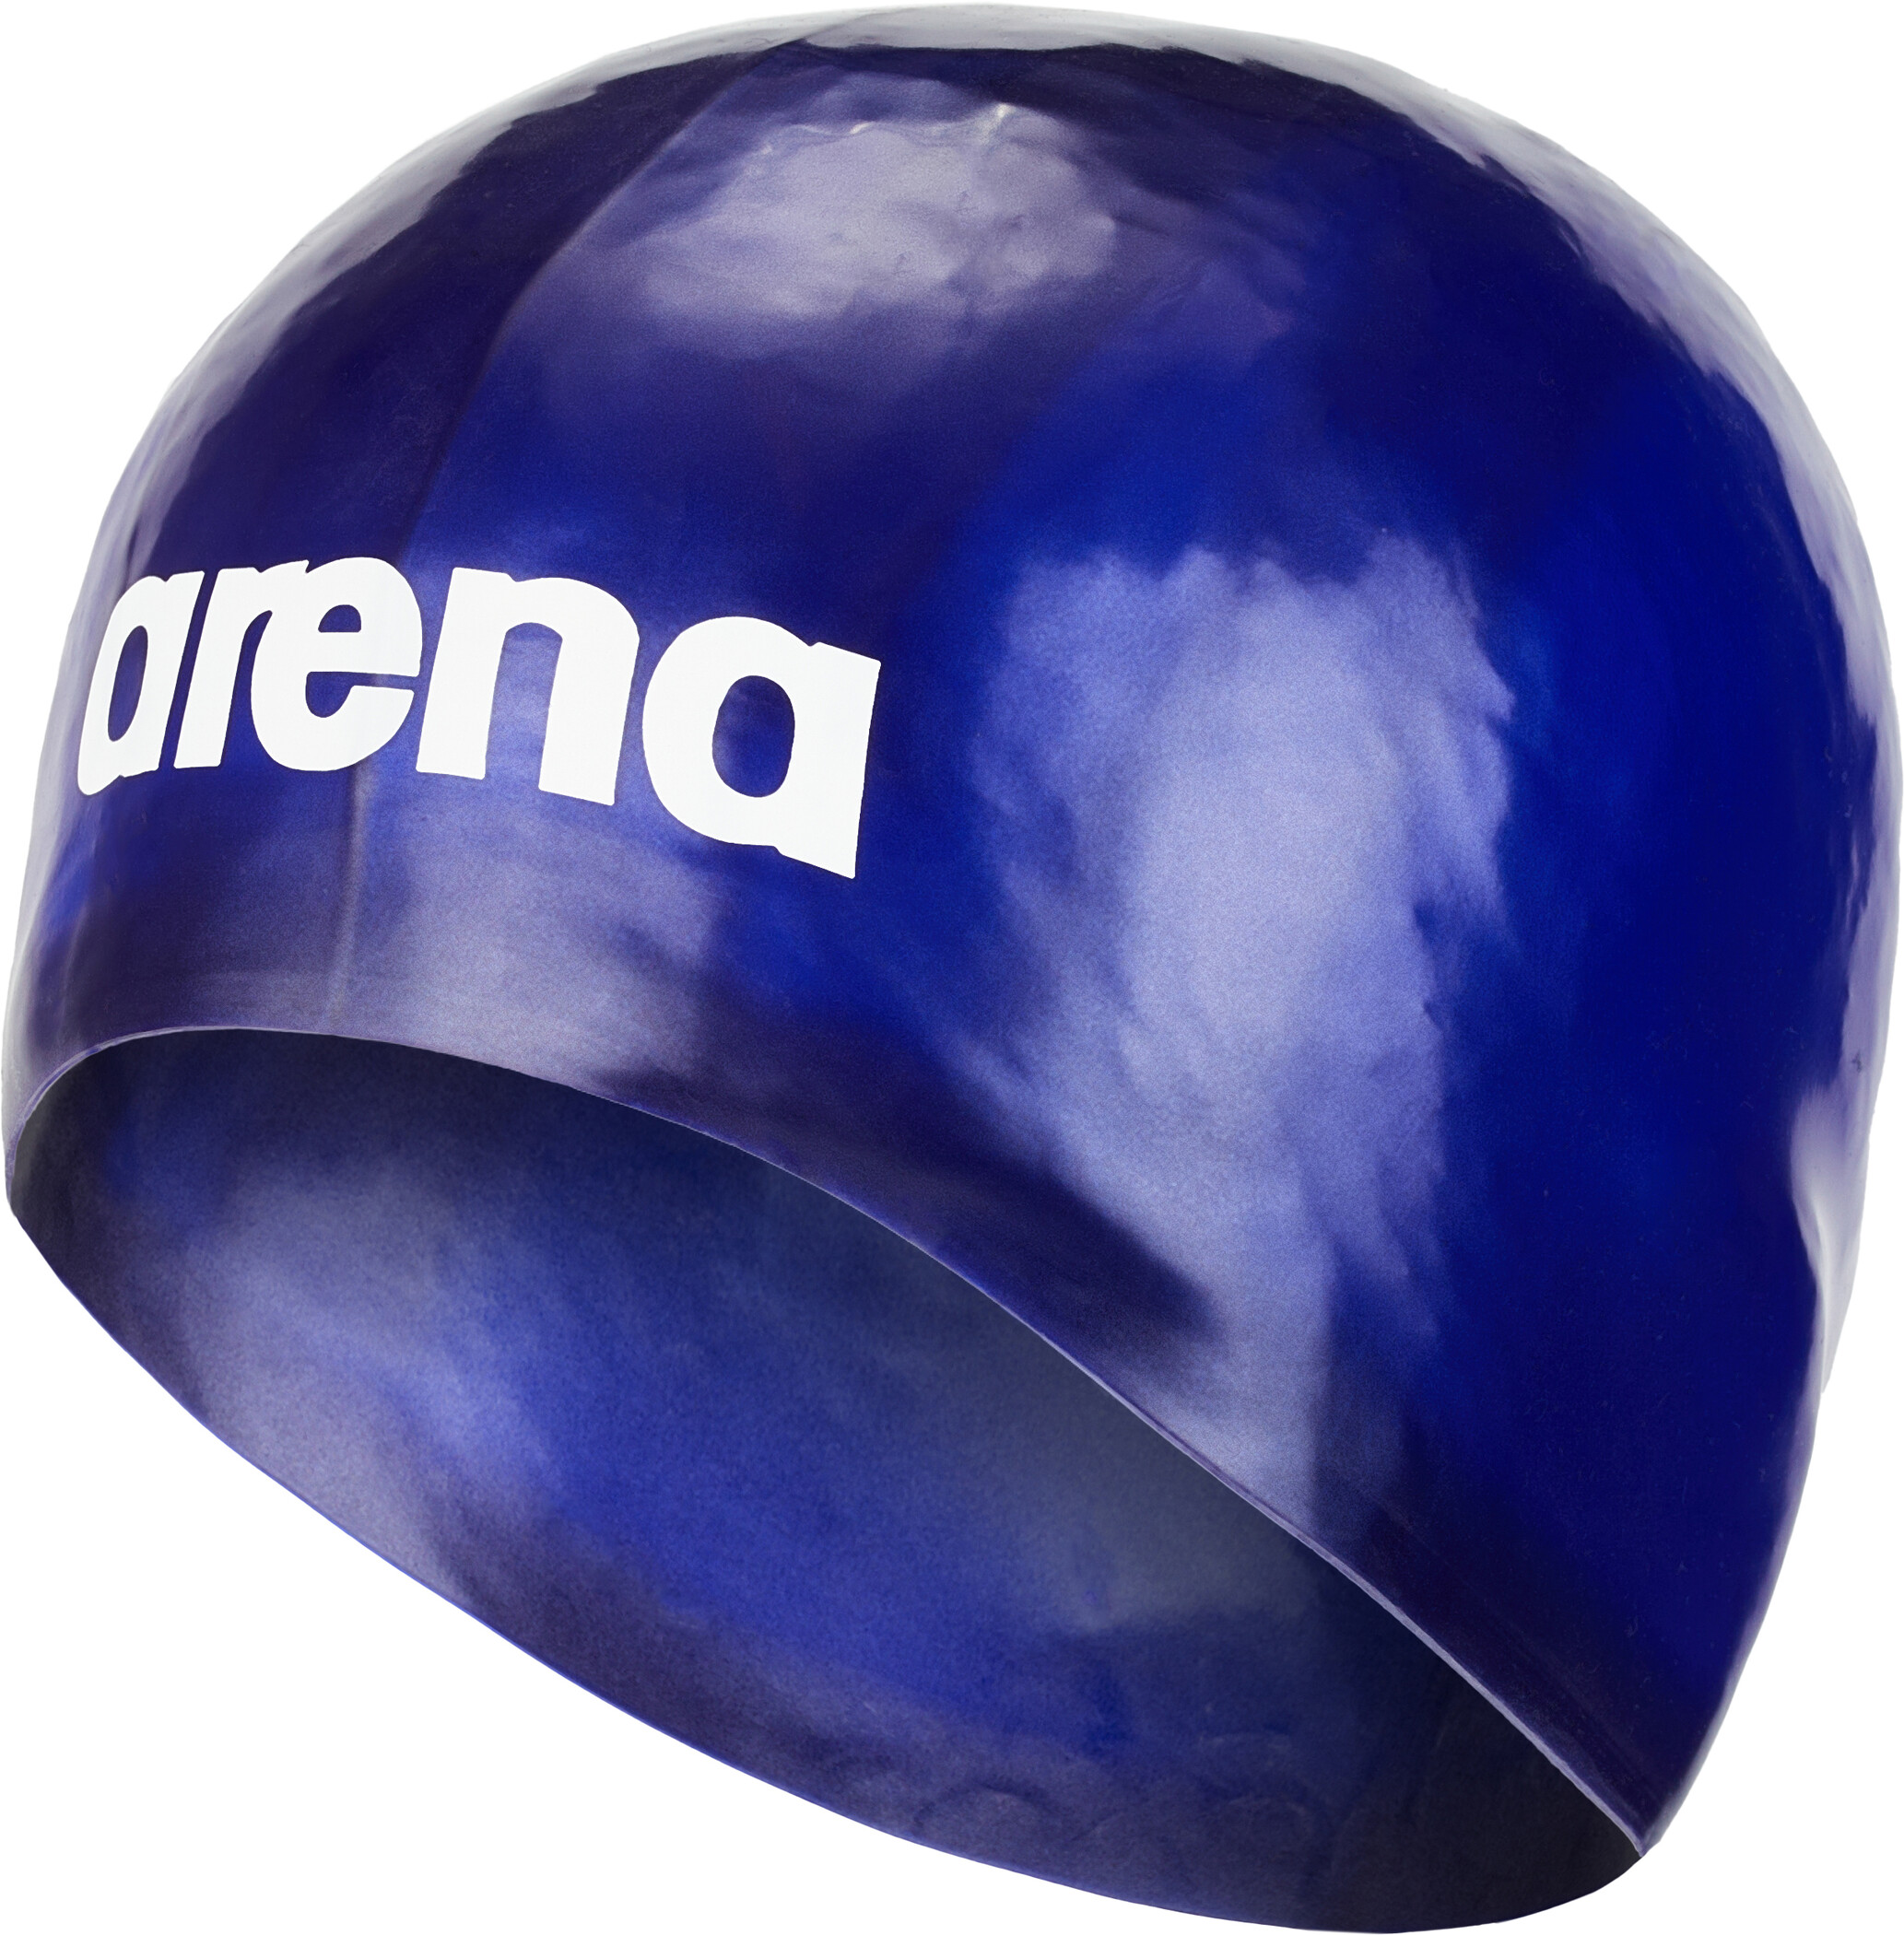 arenaMoulded Pro II Schwimmkappe blau